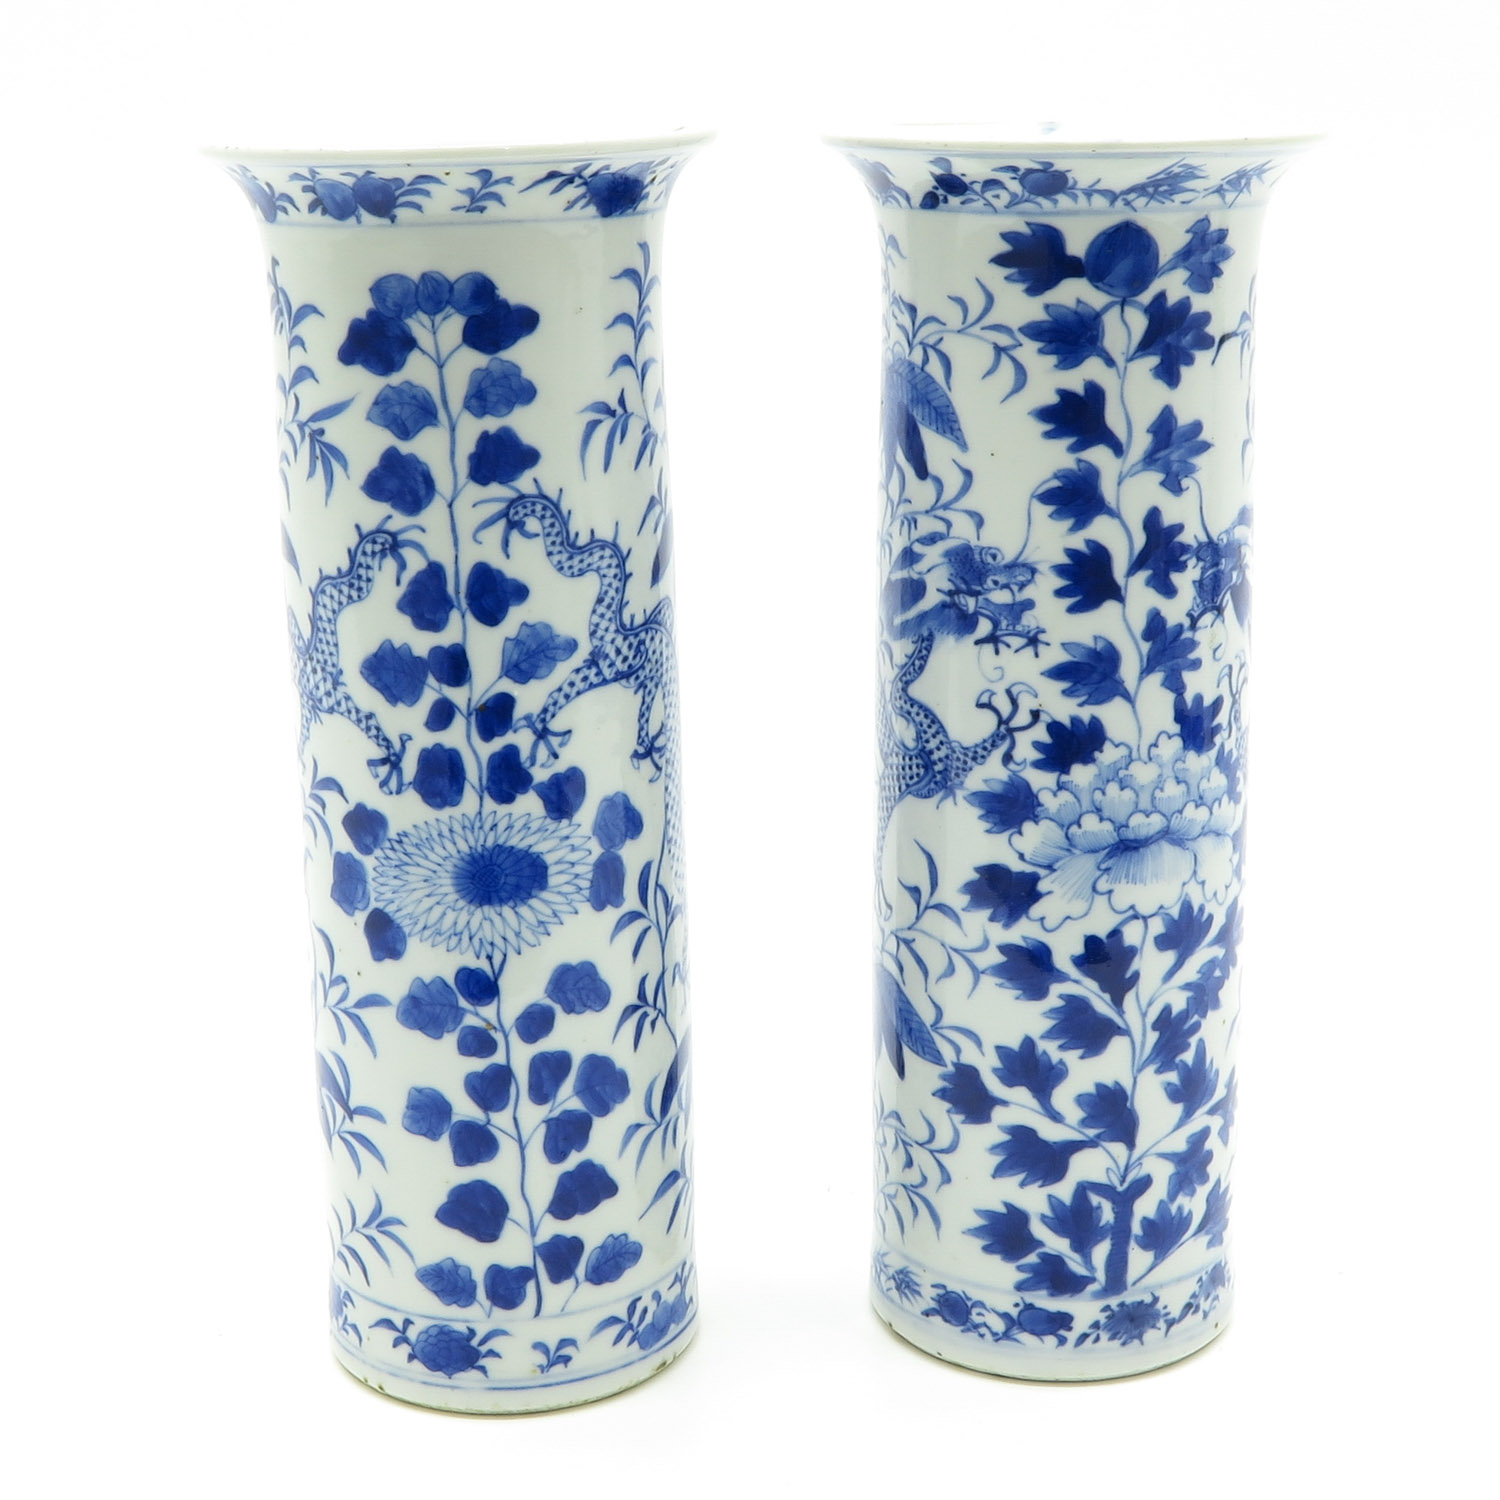 Lot of 2 China Porcelain Vases - Image 4 of 6